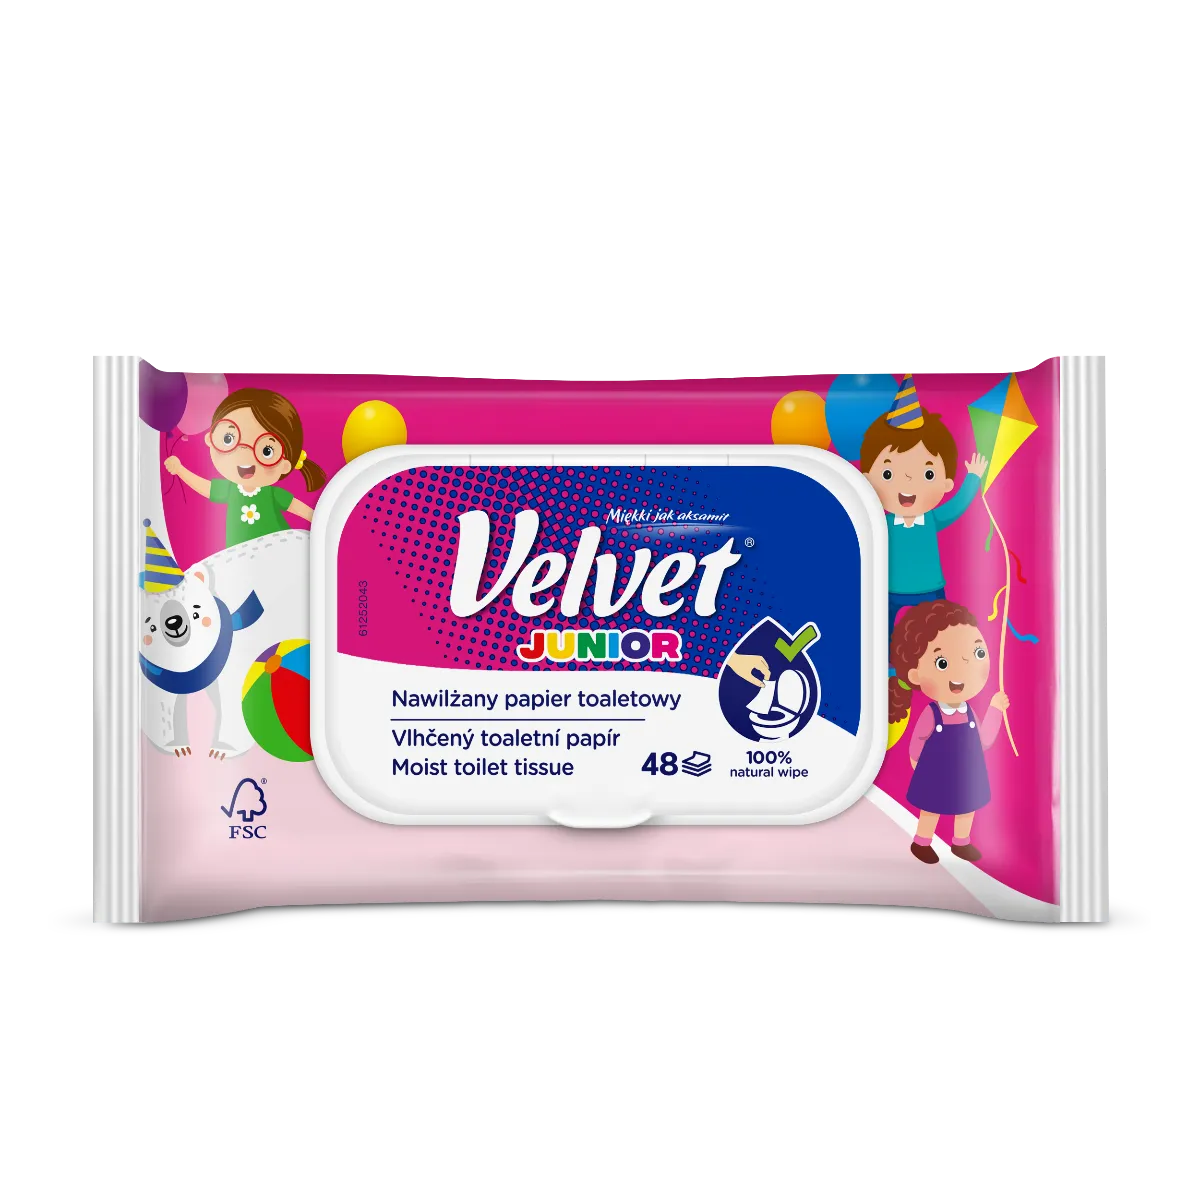 Velvet Junior nawilżany papier toaletowy, 1 szt. 